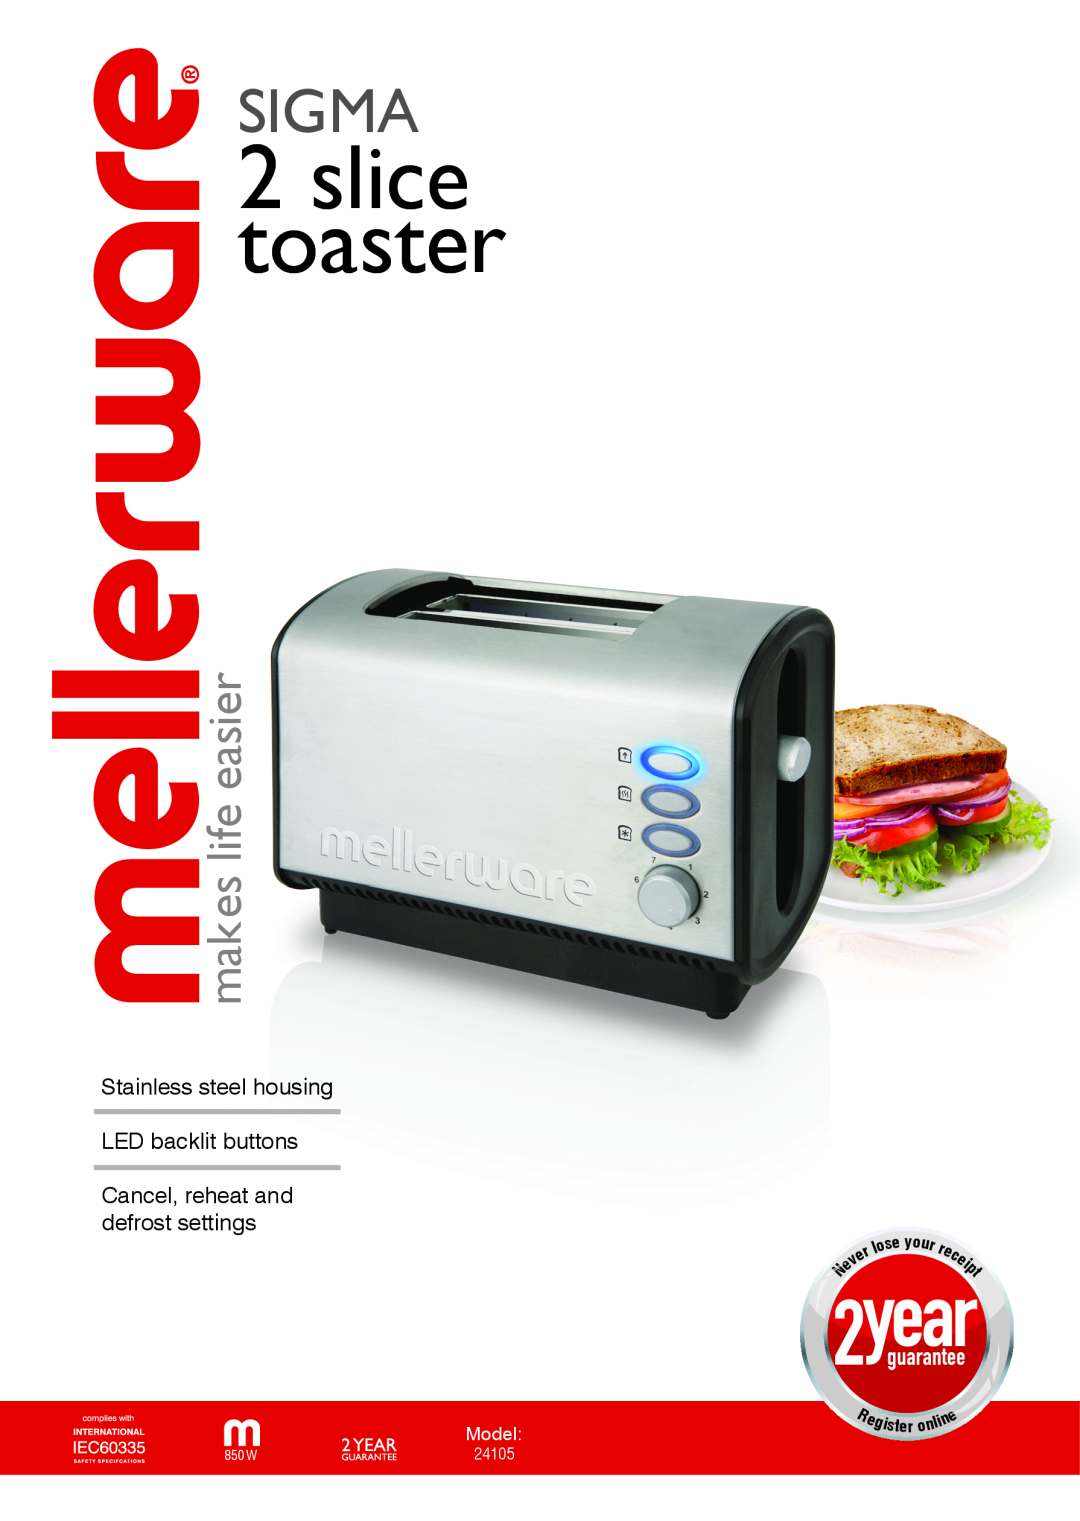 Mellerware 24105 850W manual slice toaster, Sigma, makes life easier, Model, e yo 